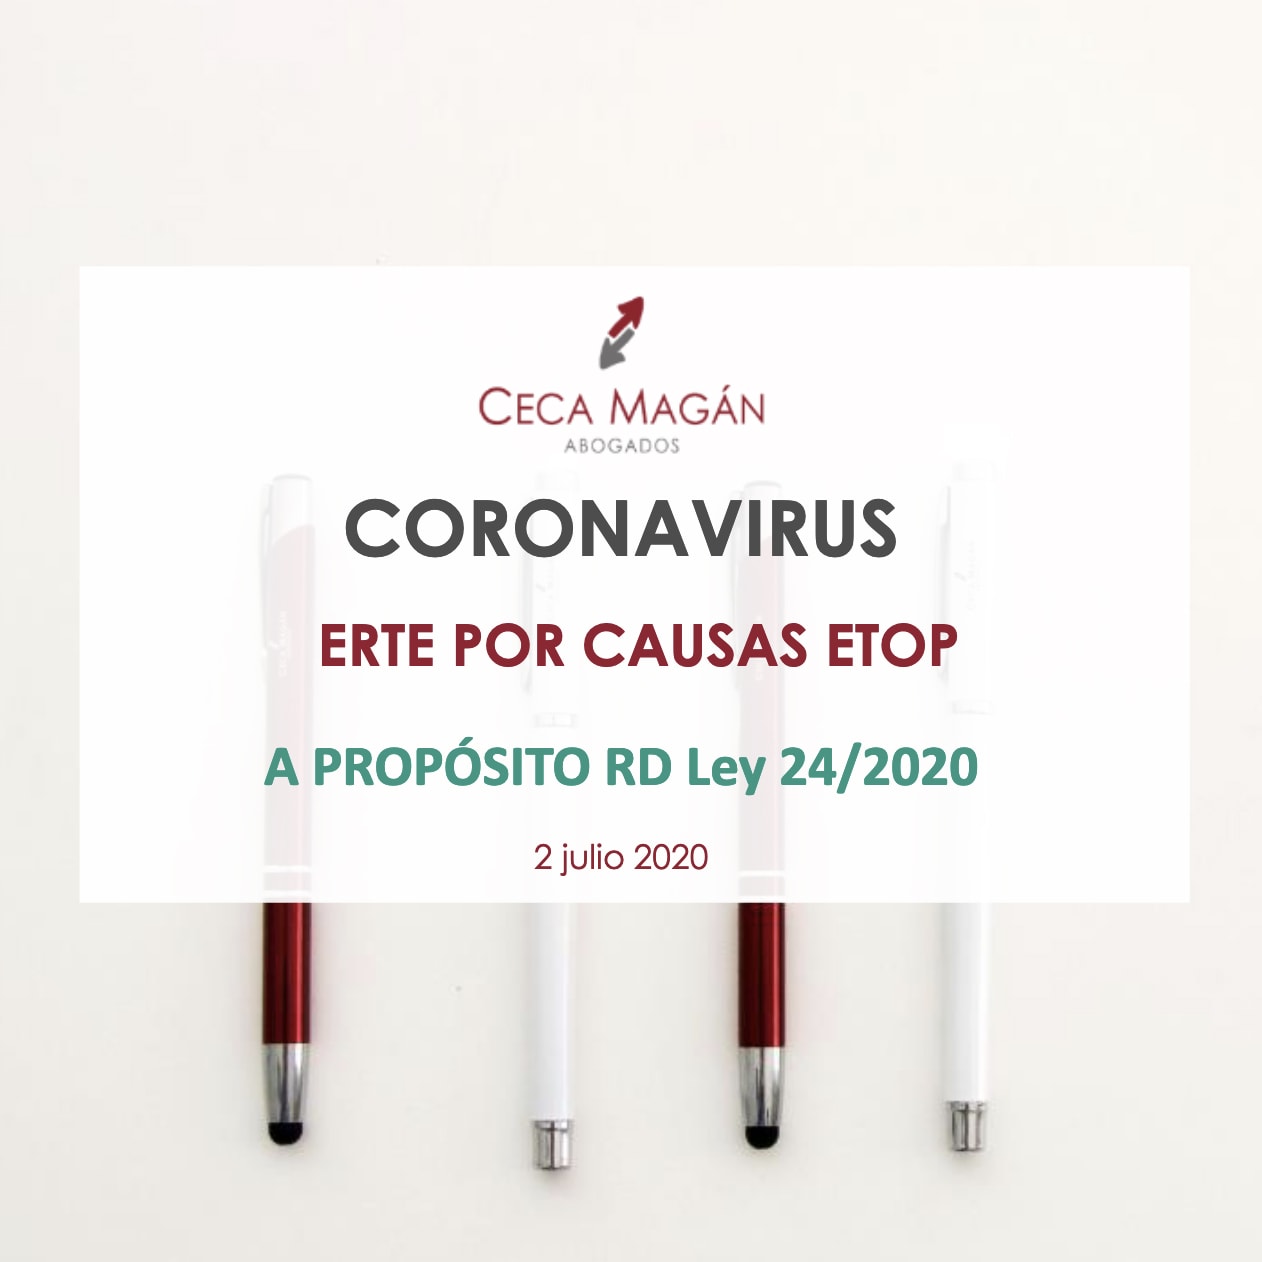 Guía gratuita: “Coronavirus: ERTE por causas ETOP”